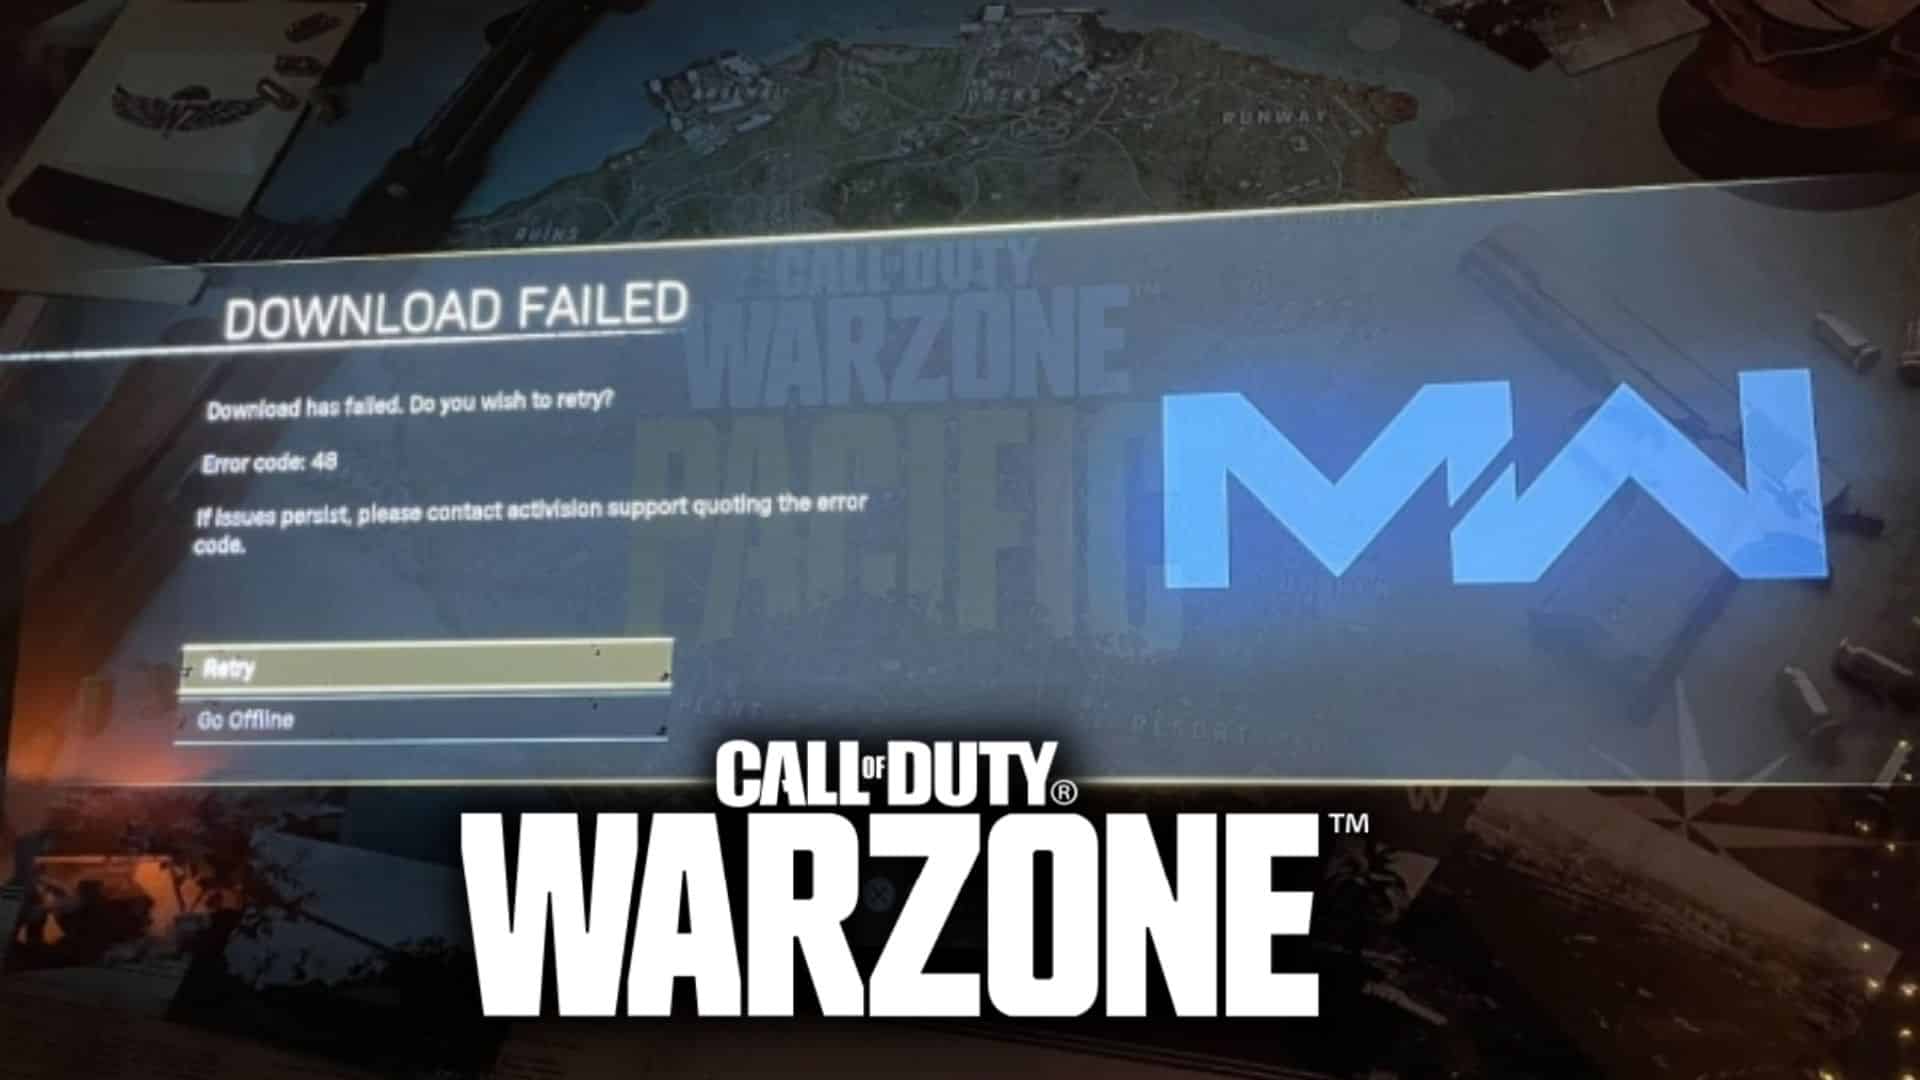 warzone error code 48